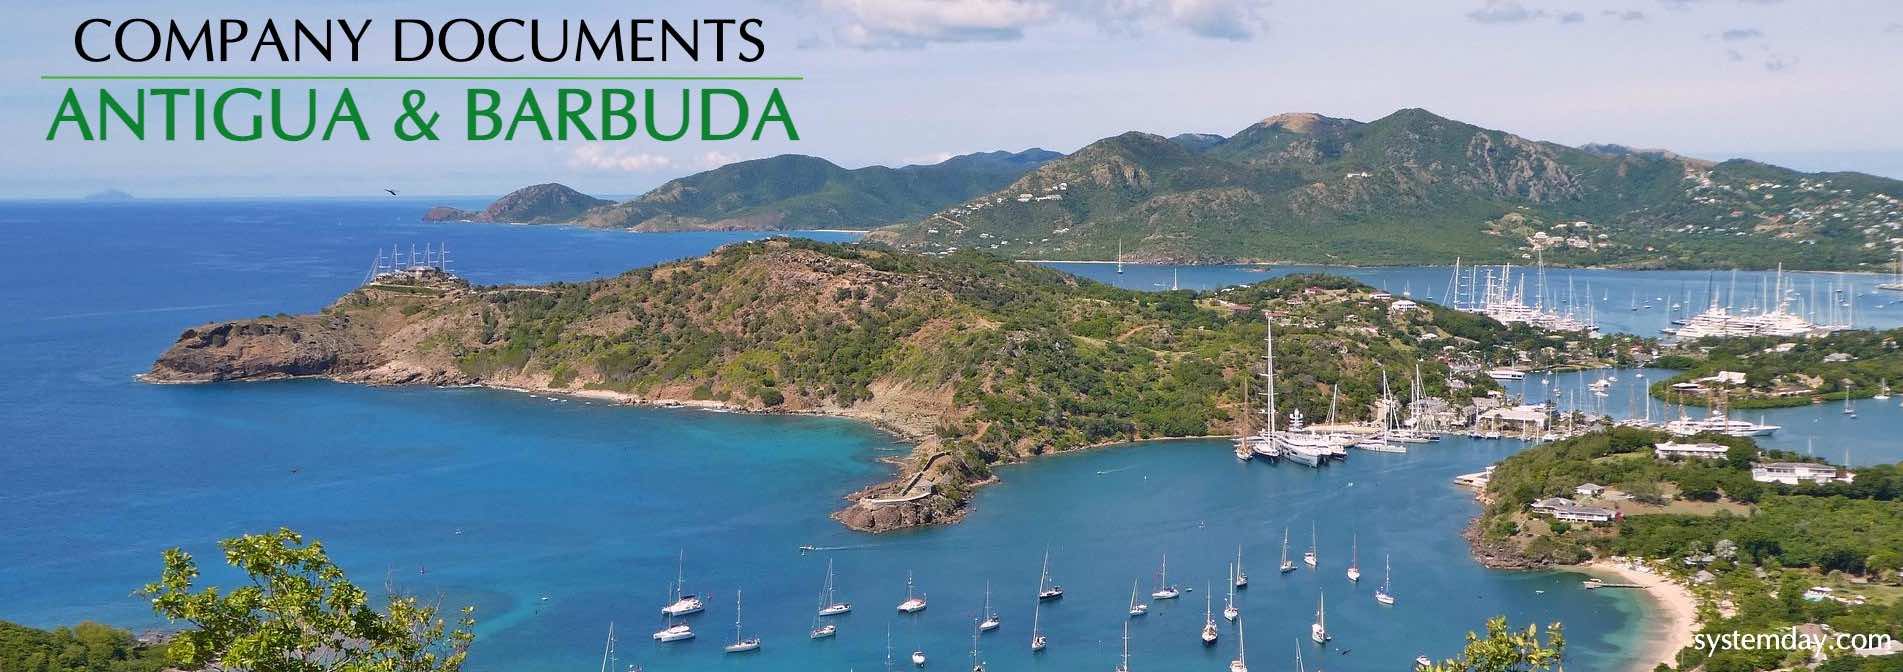 Antigua and Barbuda Company Documents